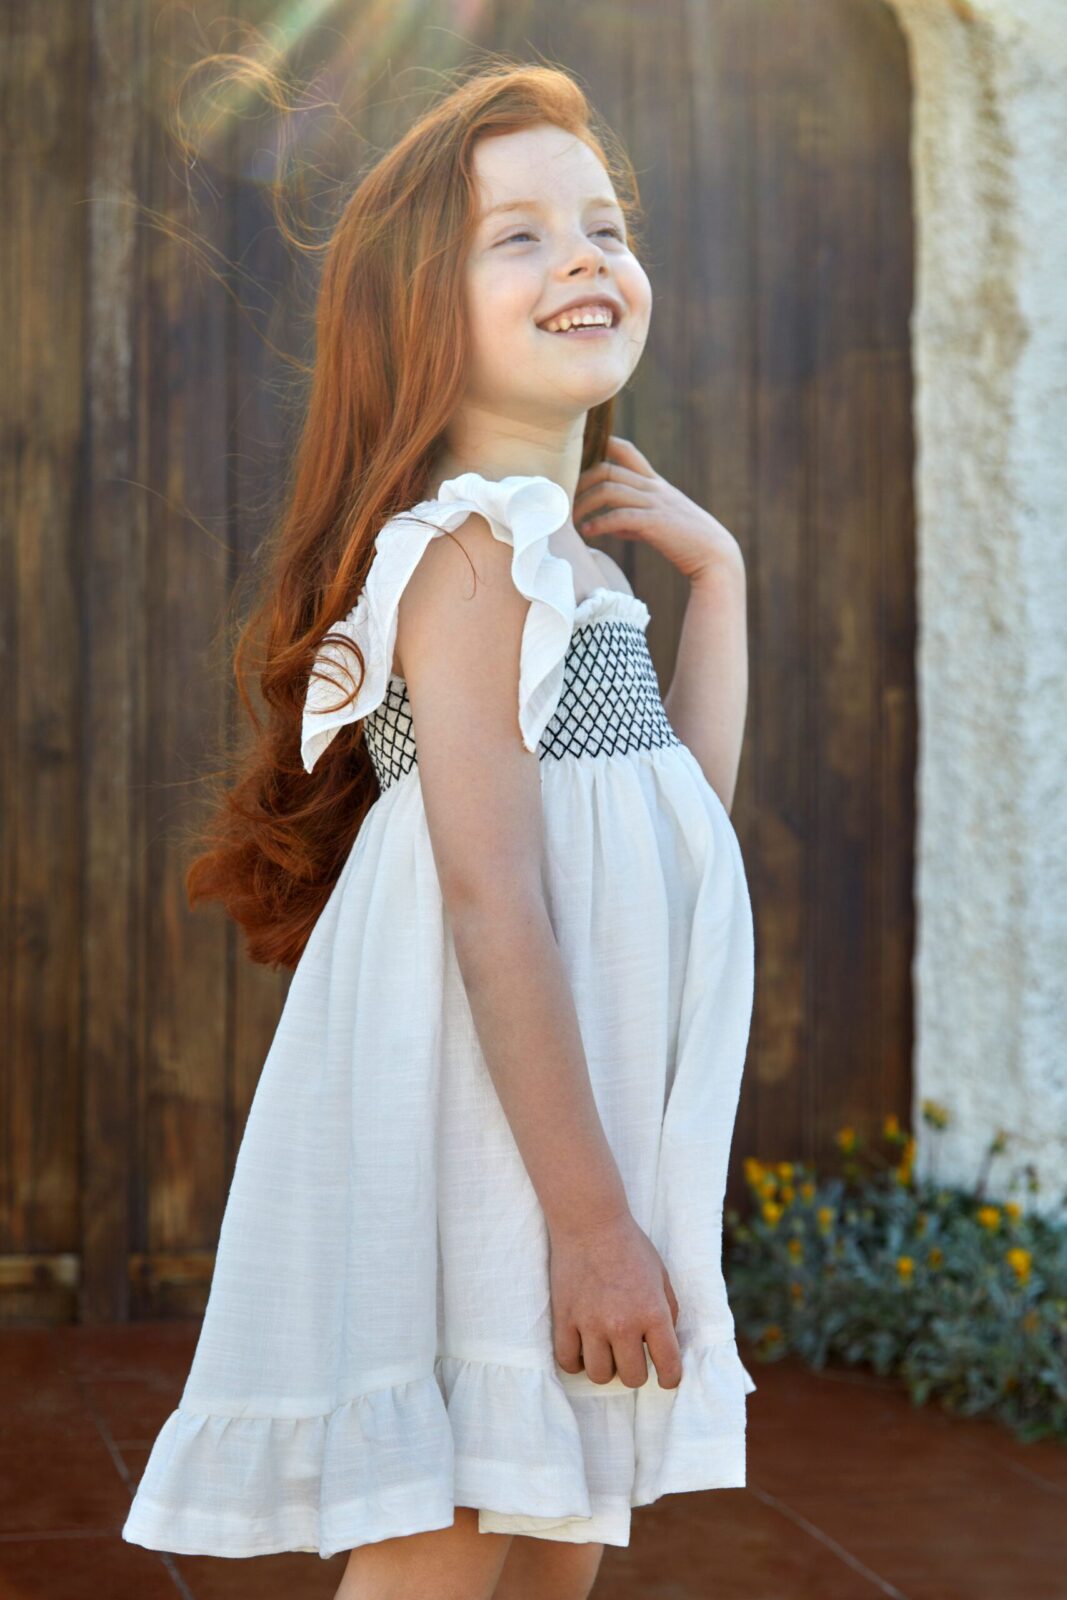 White Smocked Dress